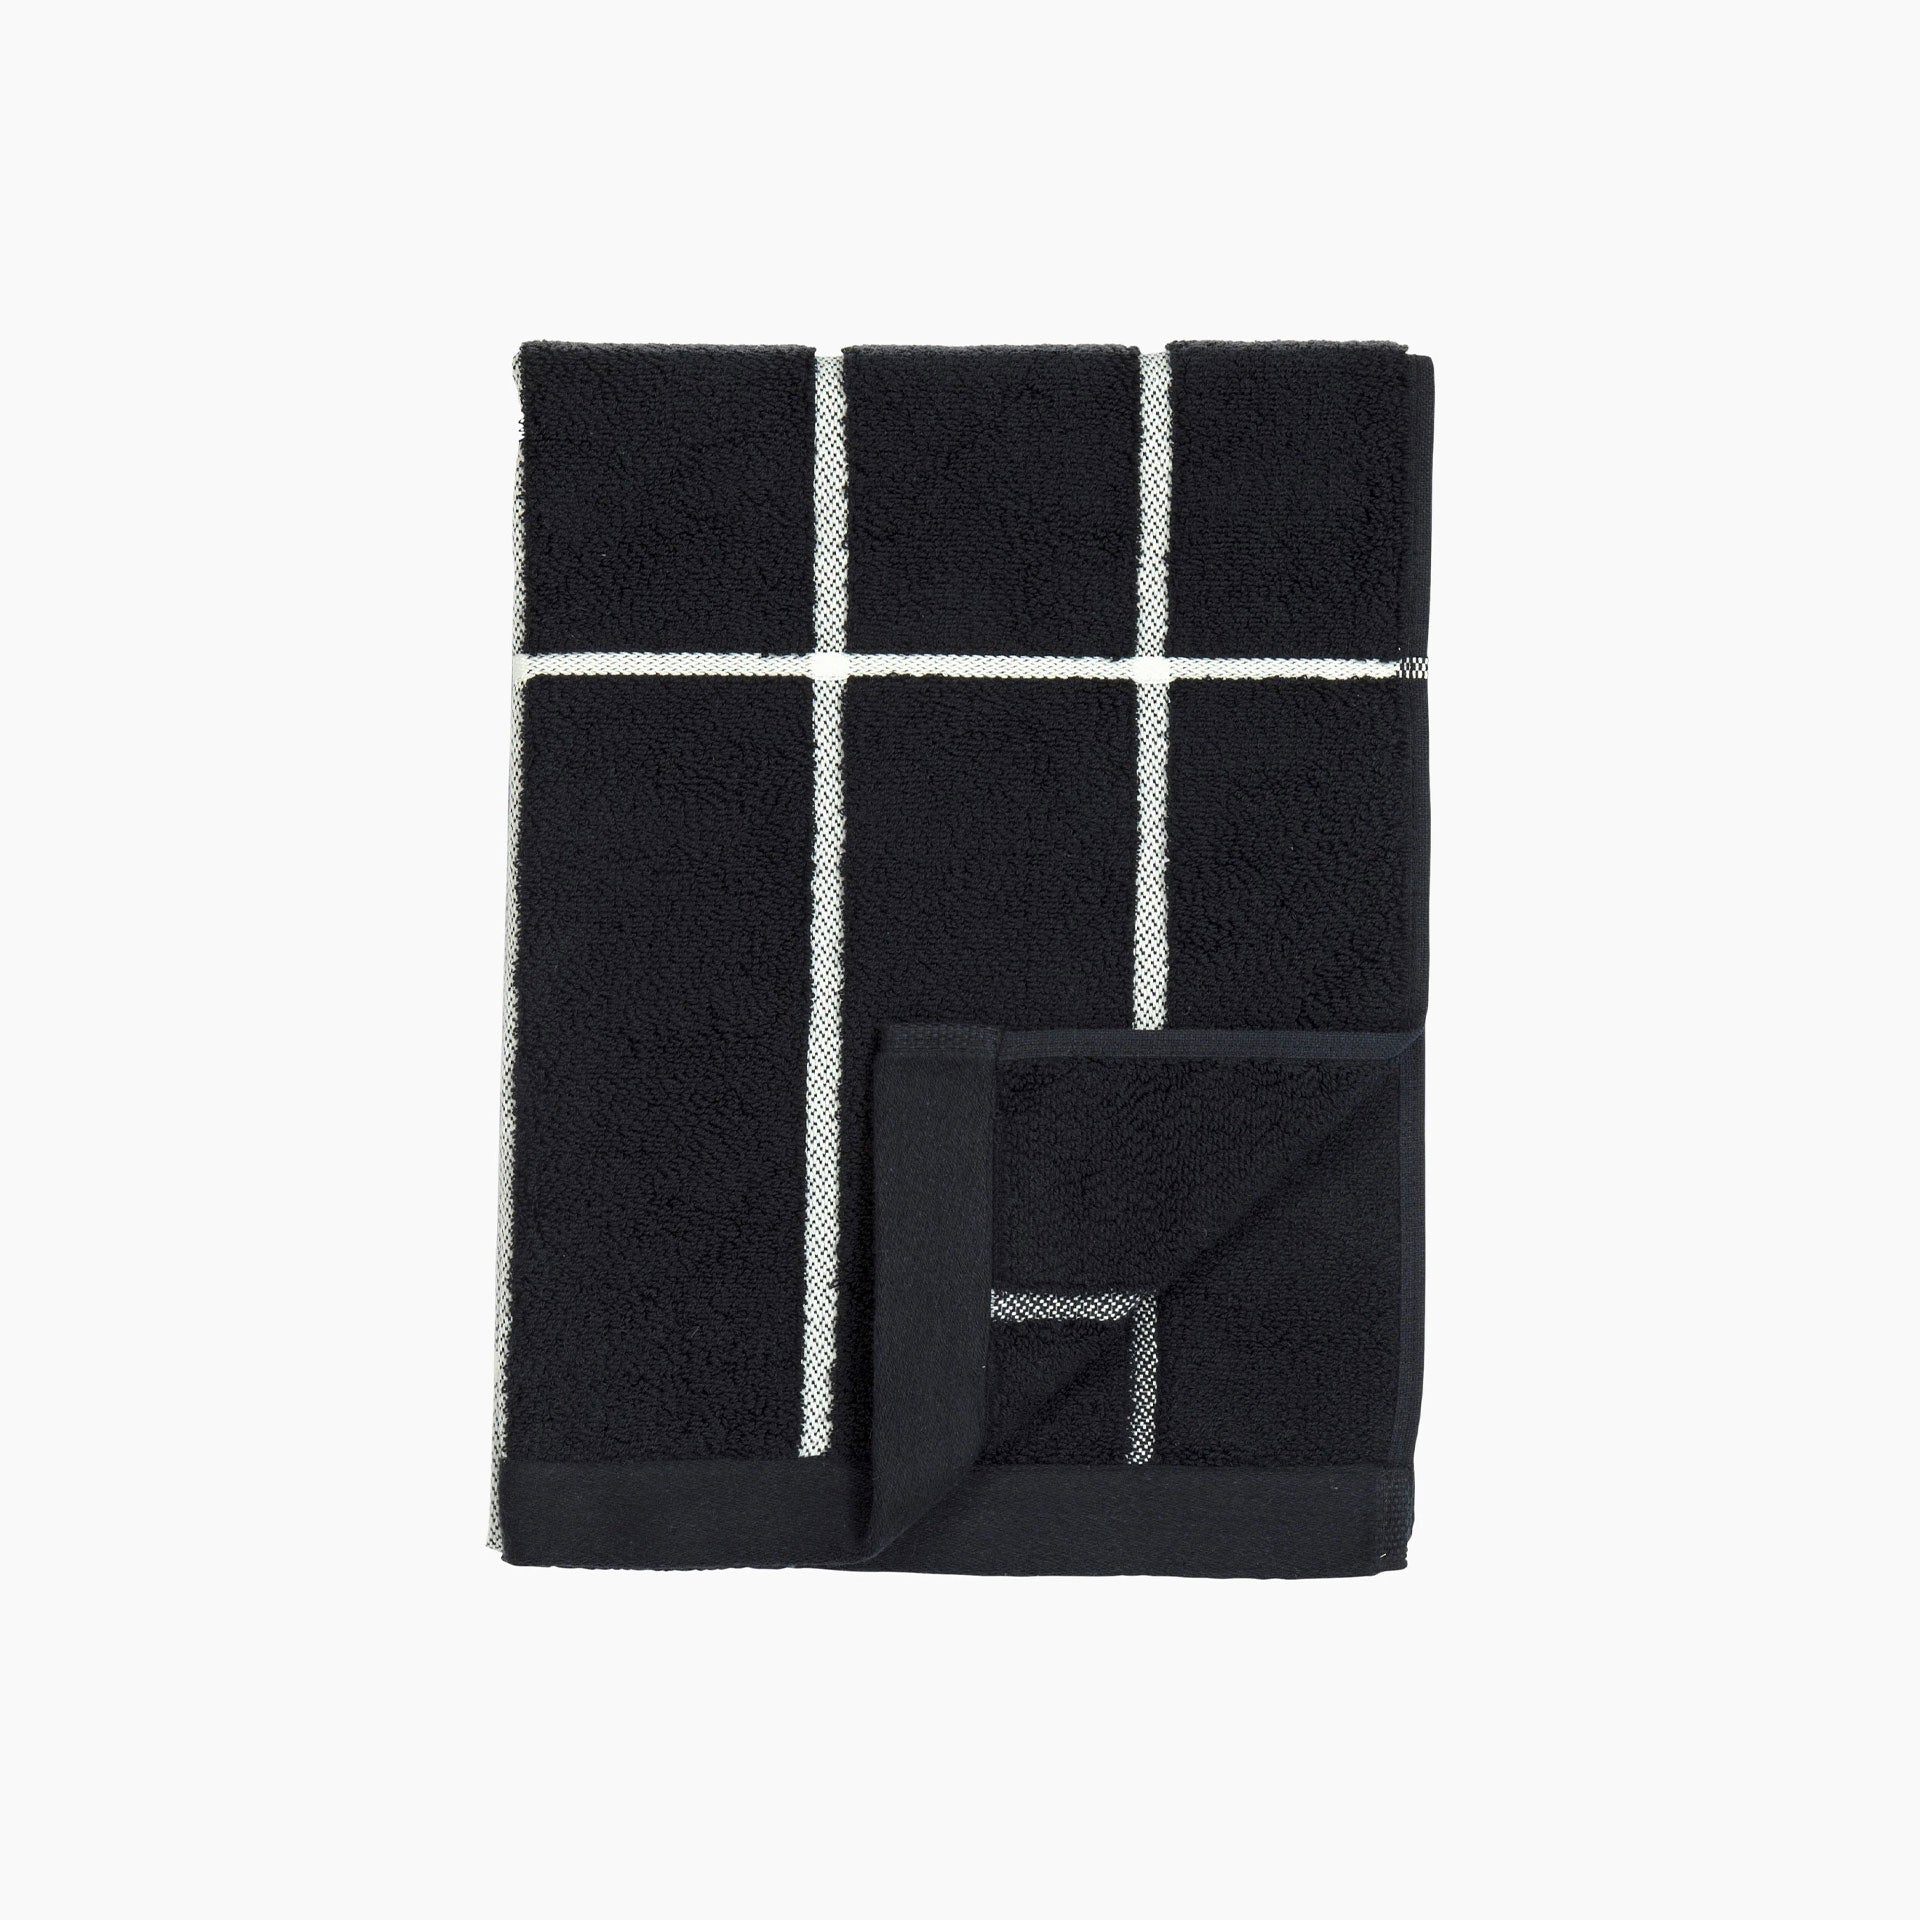 Marimekko Tiiliskivi Hand Towel - Black, White